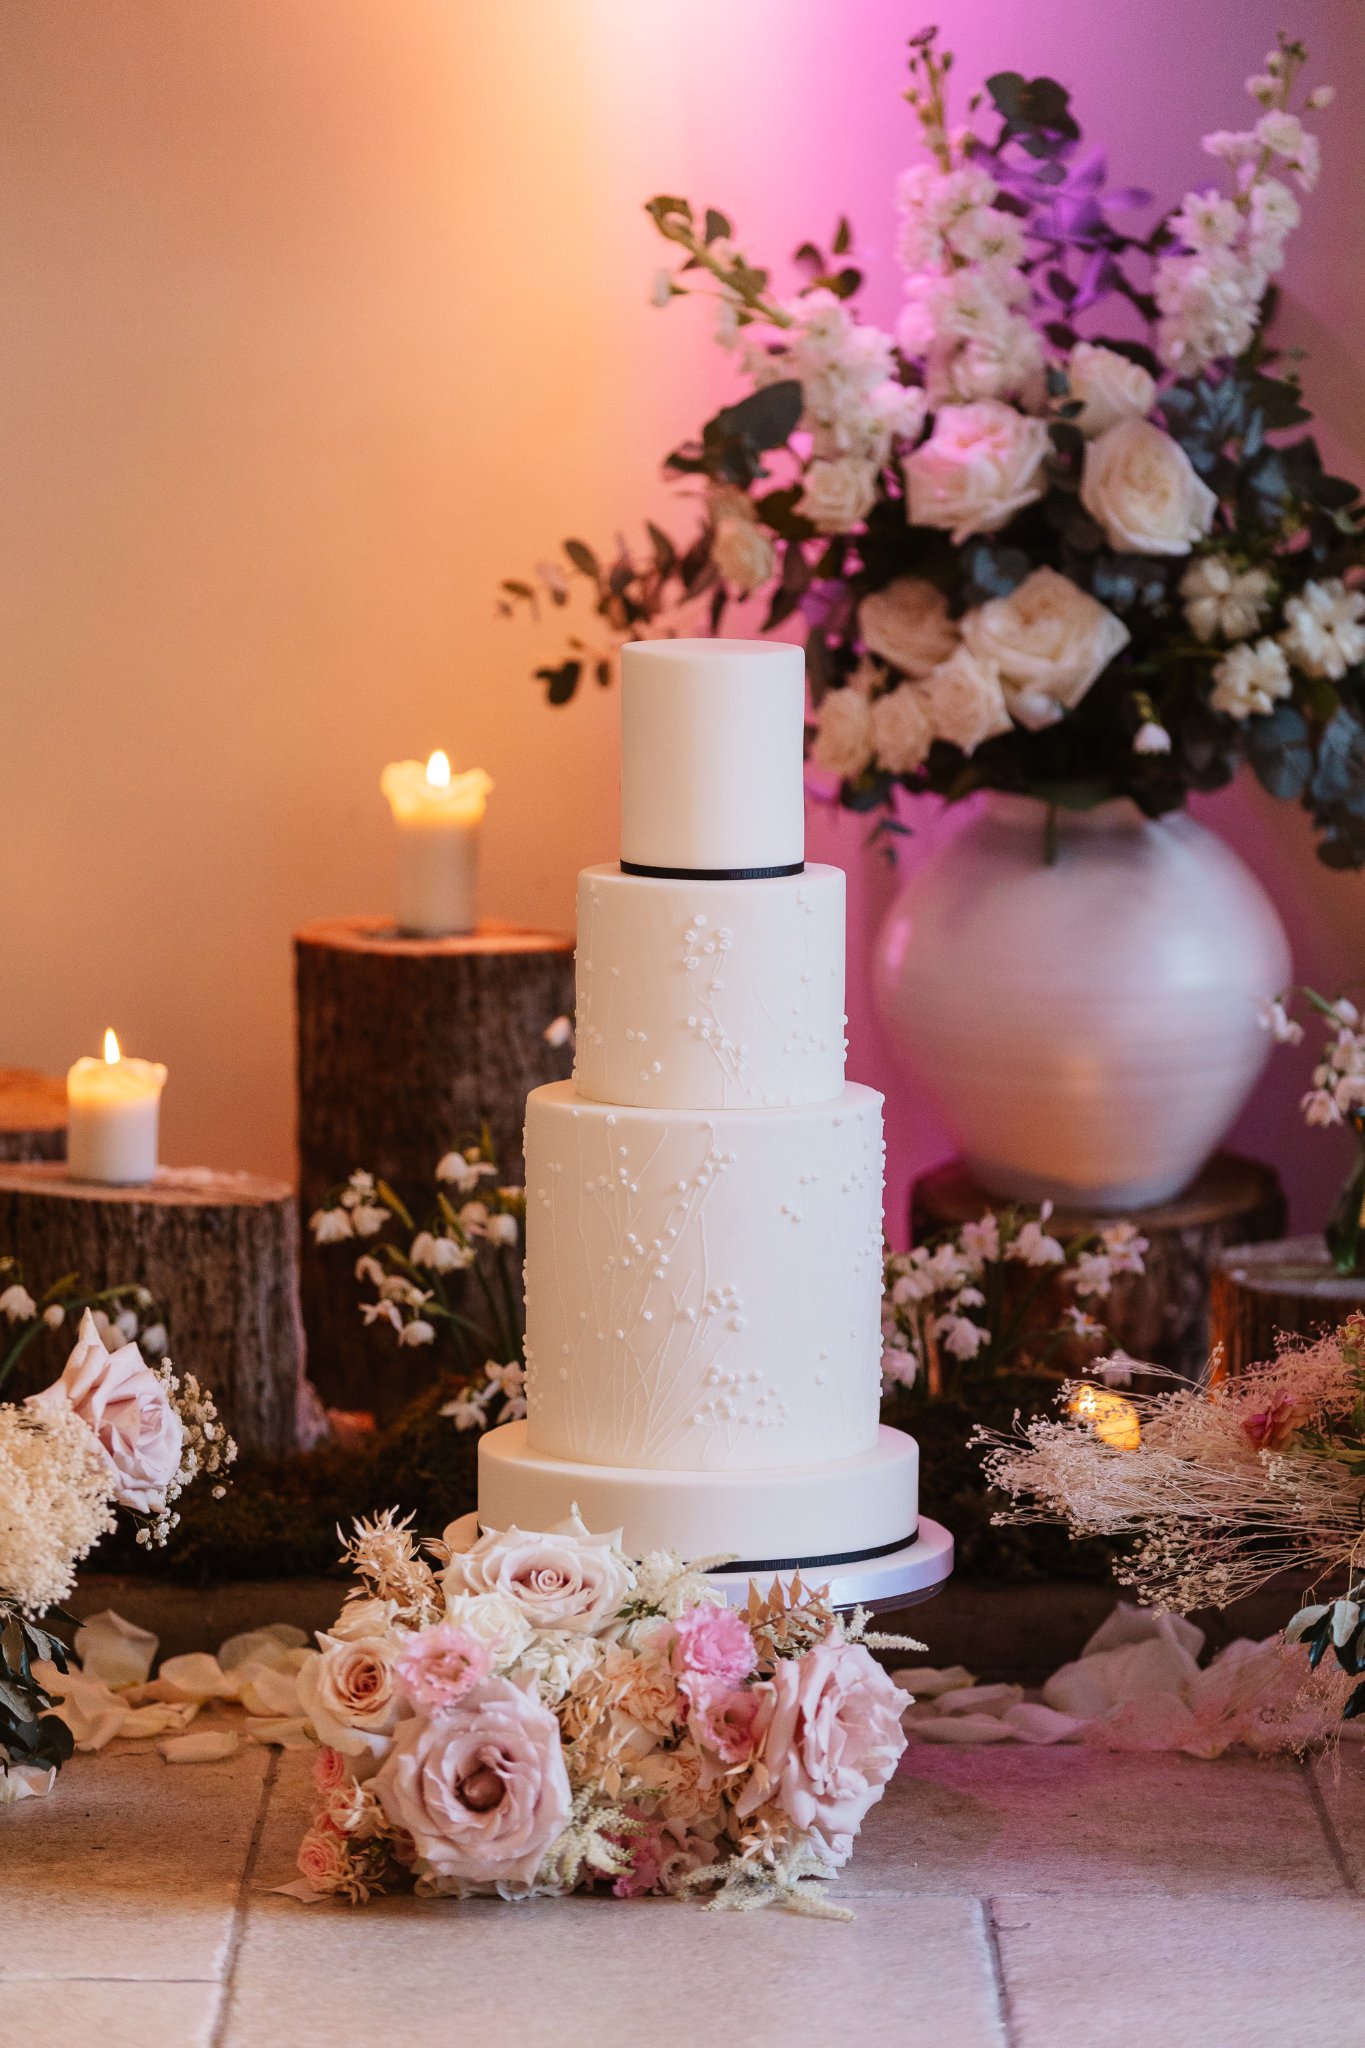 Romantic wedding cake and flowers north wales.jpg